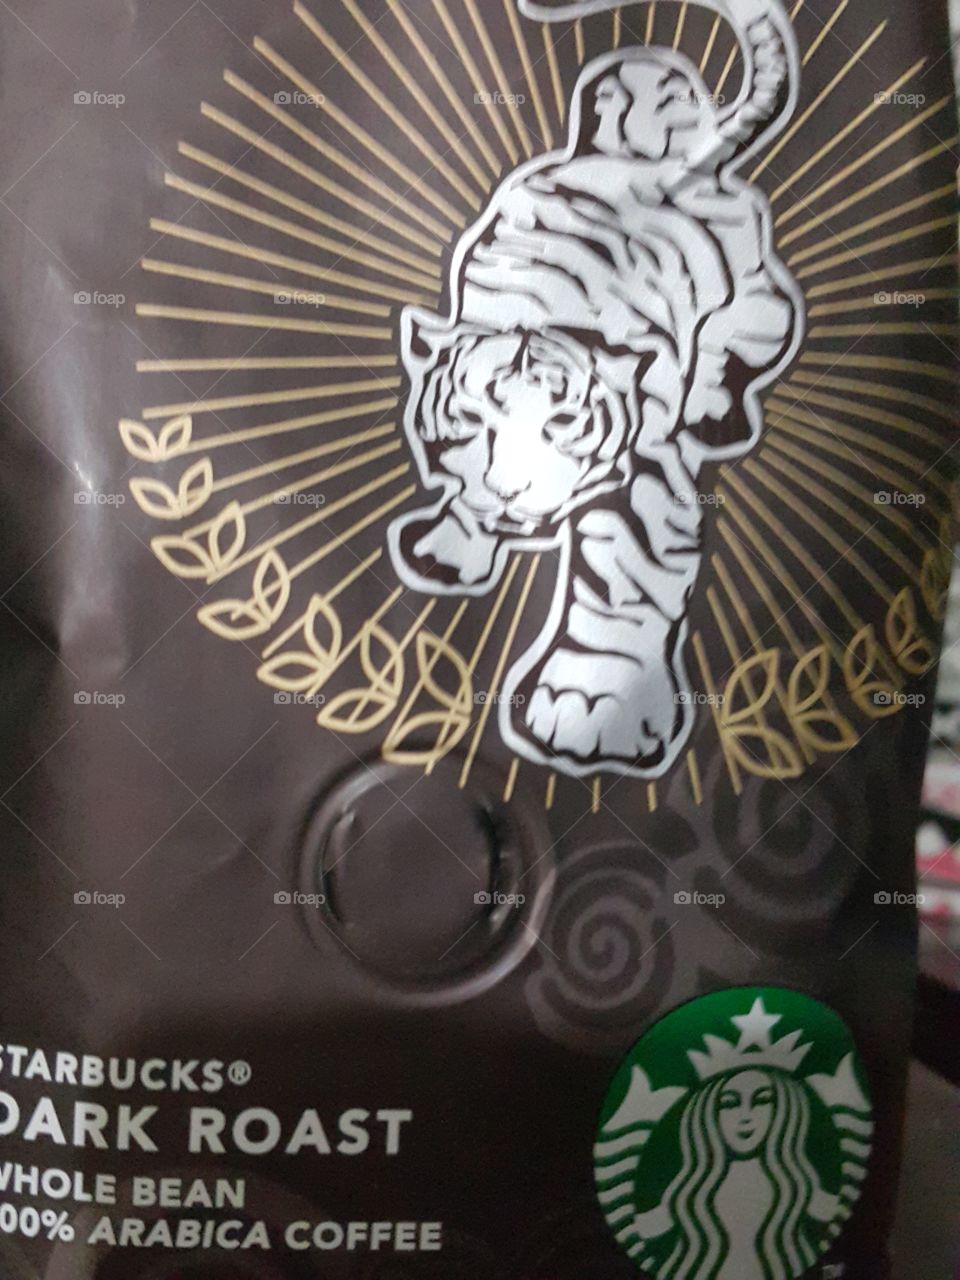 Sumatran dark roast Starbucks